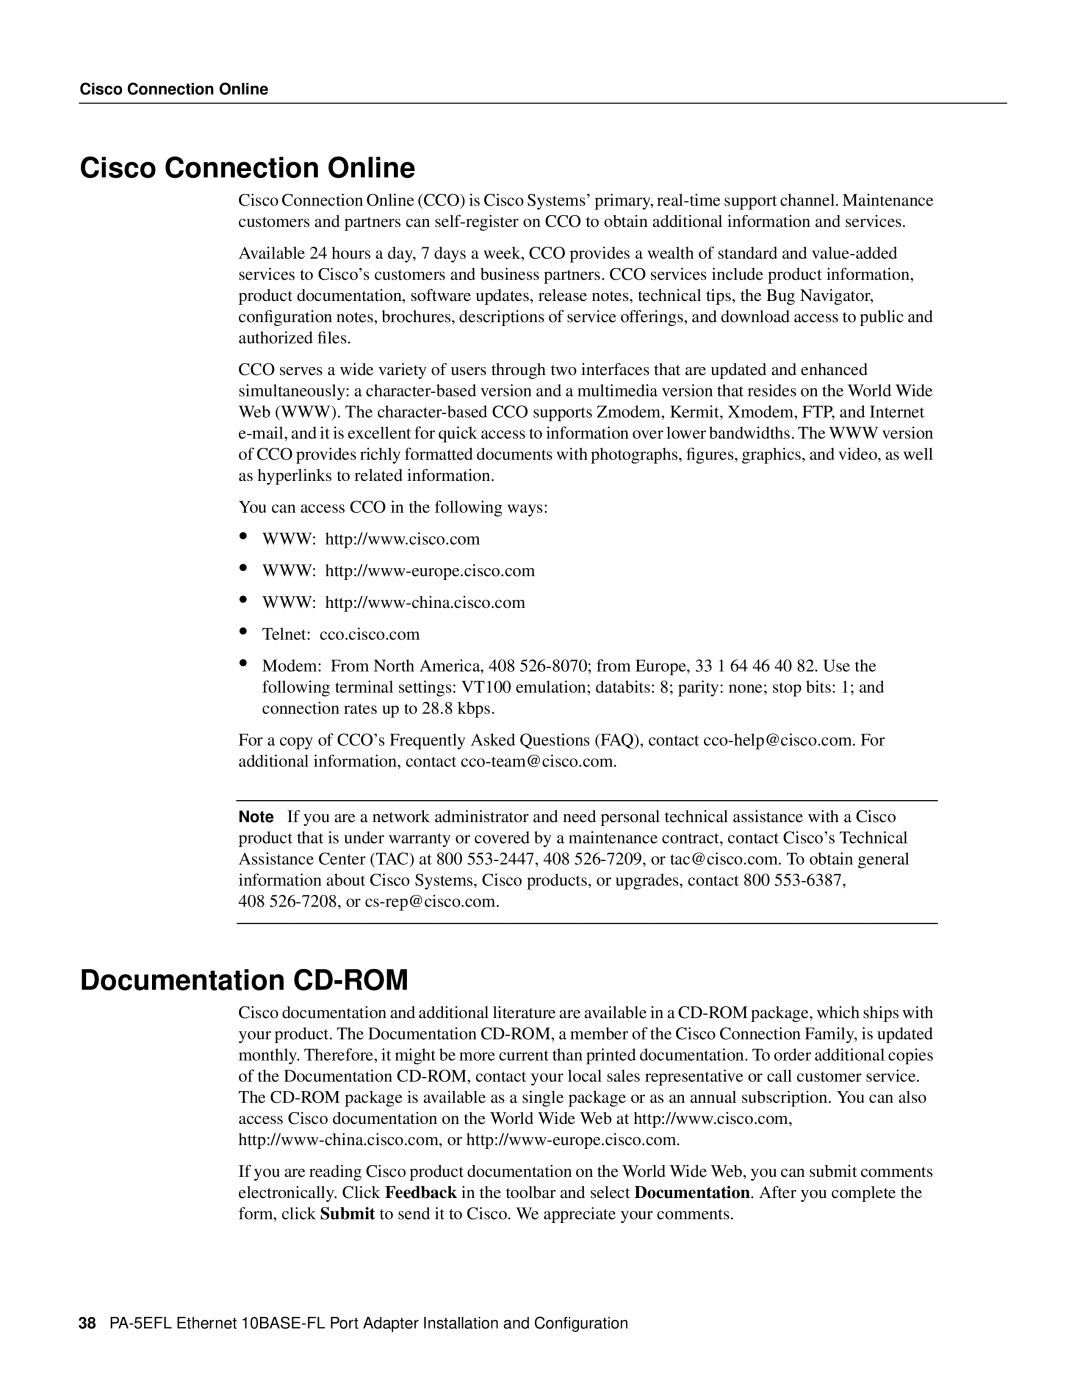 Cisco Systems PA-5EFL=, 10BASE-FL manual Cisco Connection Online, Documentation CD-ROM 